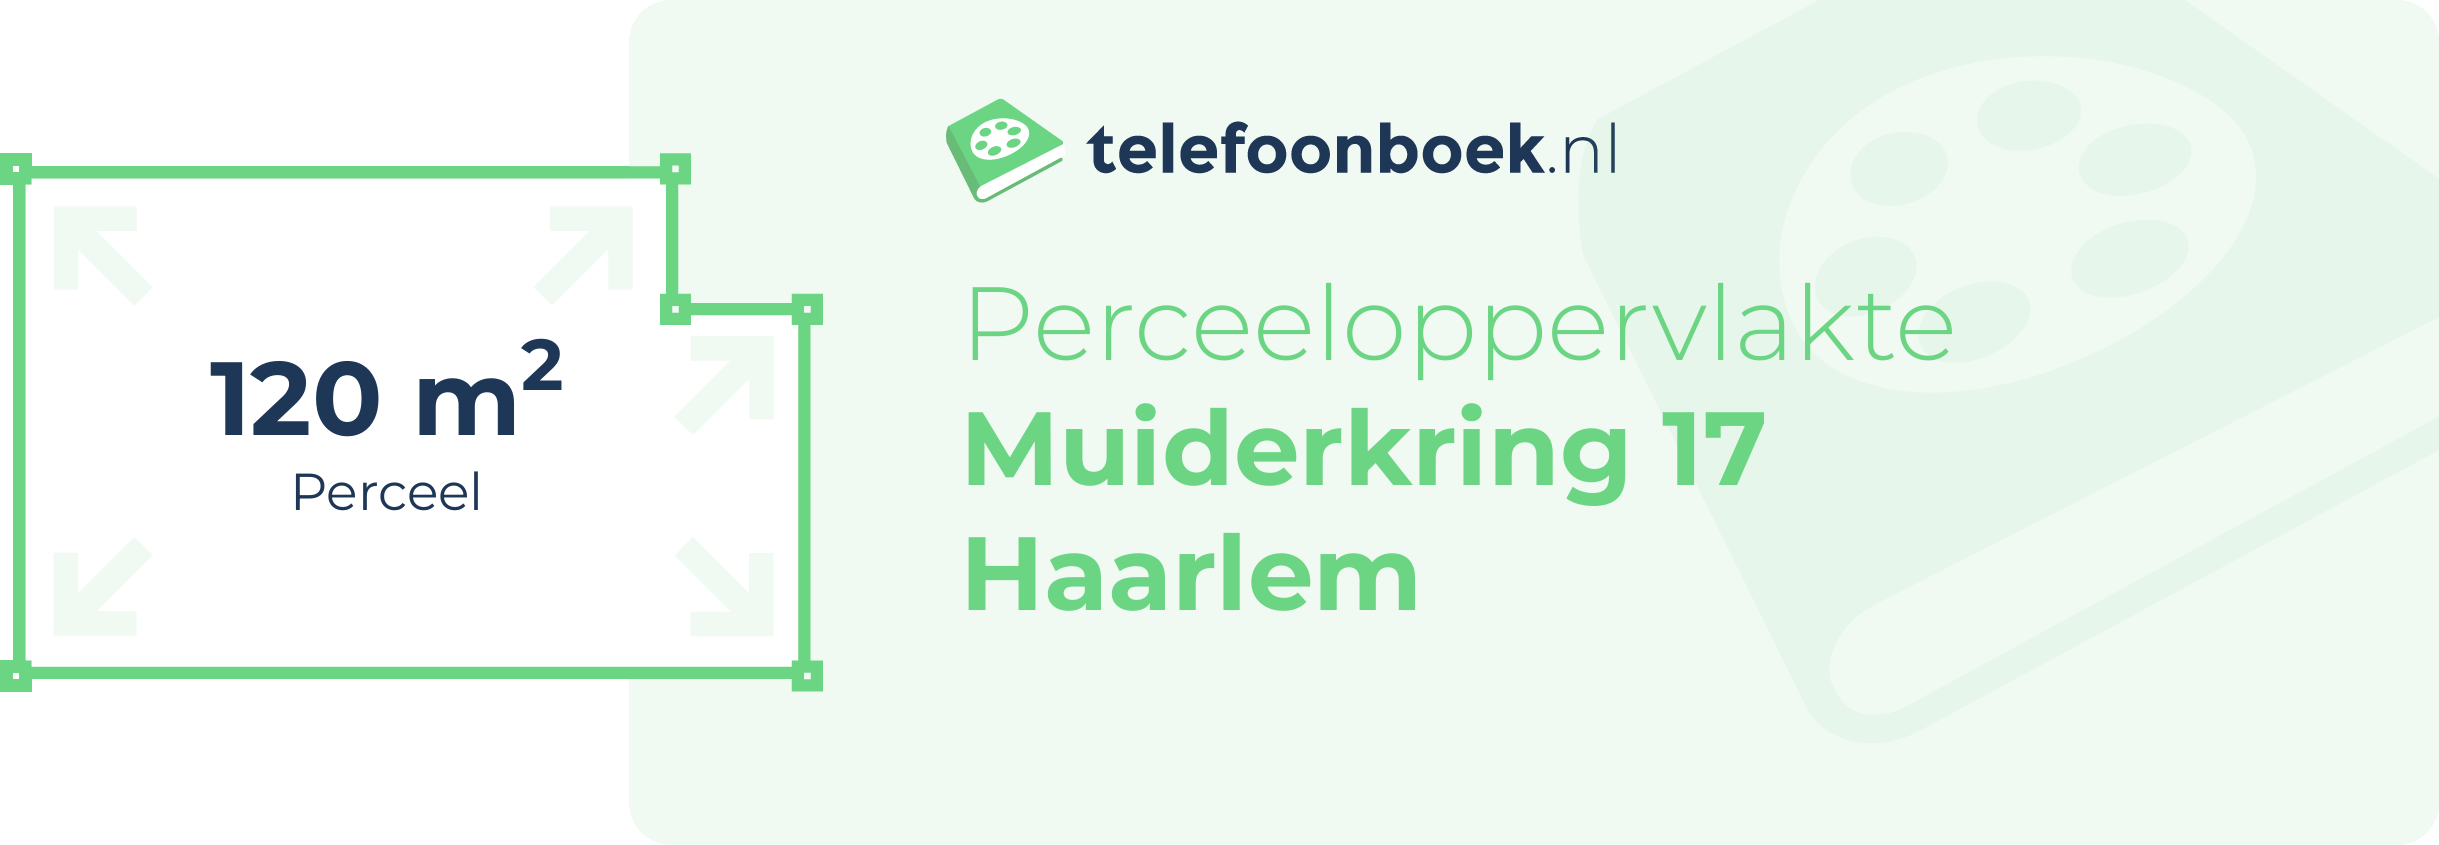 Perceeloppervlakte Muiderkring 17 Haarlem